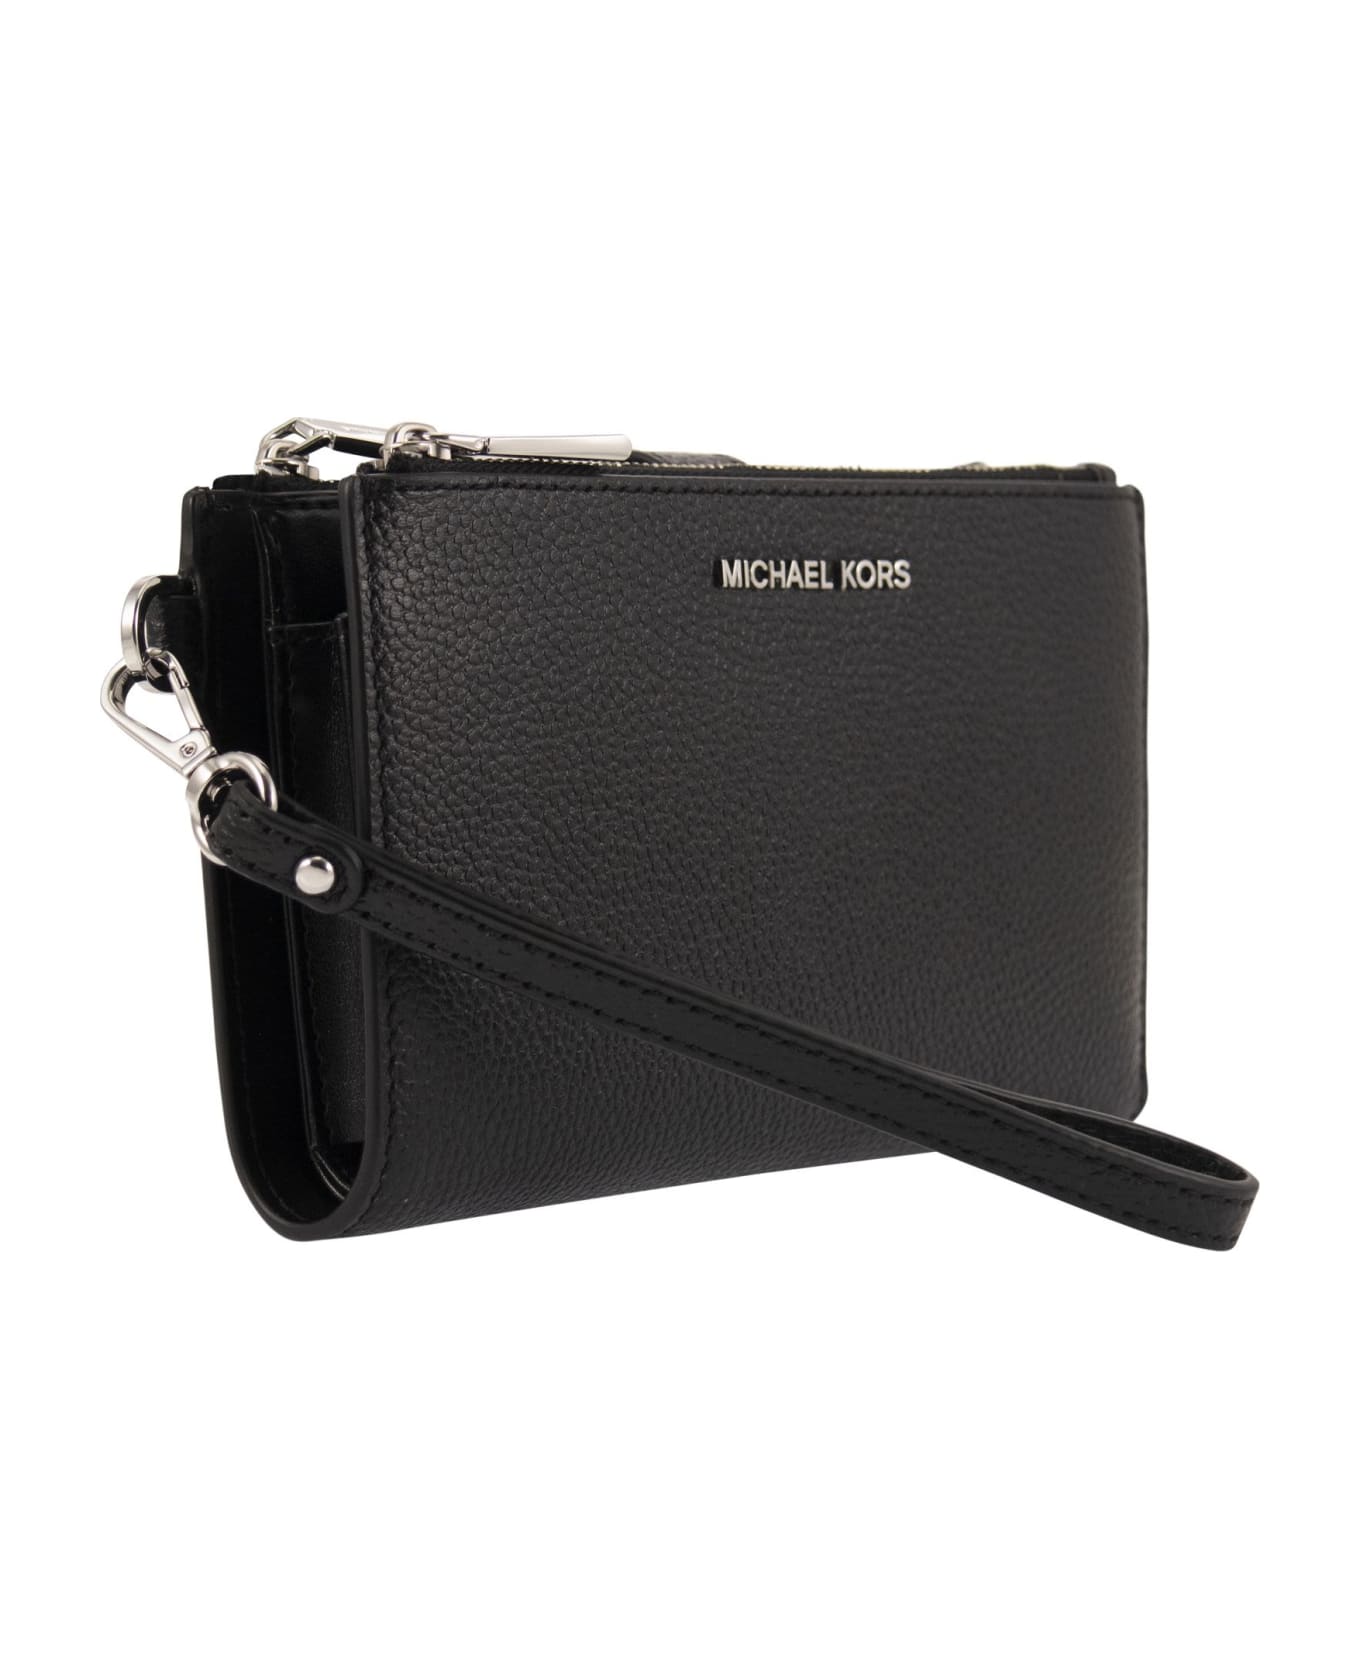 Michael Kors Grained Leather Smartphone Wallet Michael Kors - BLACK